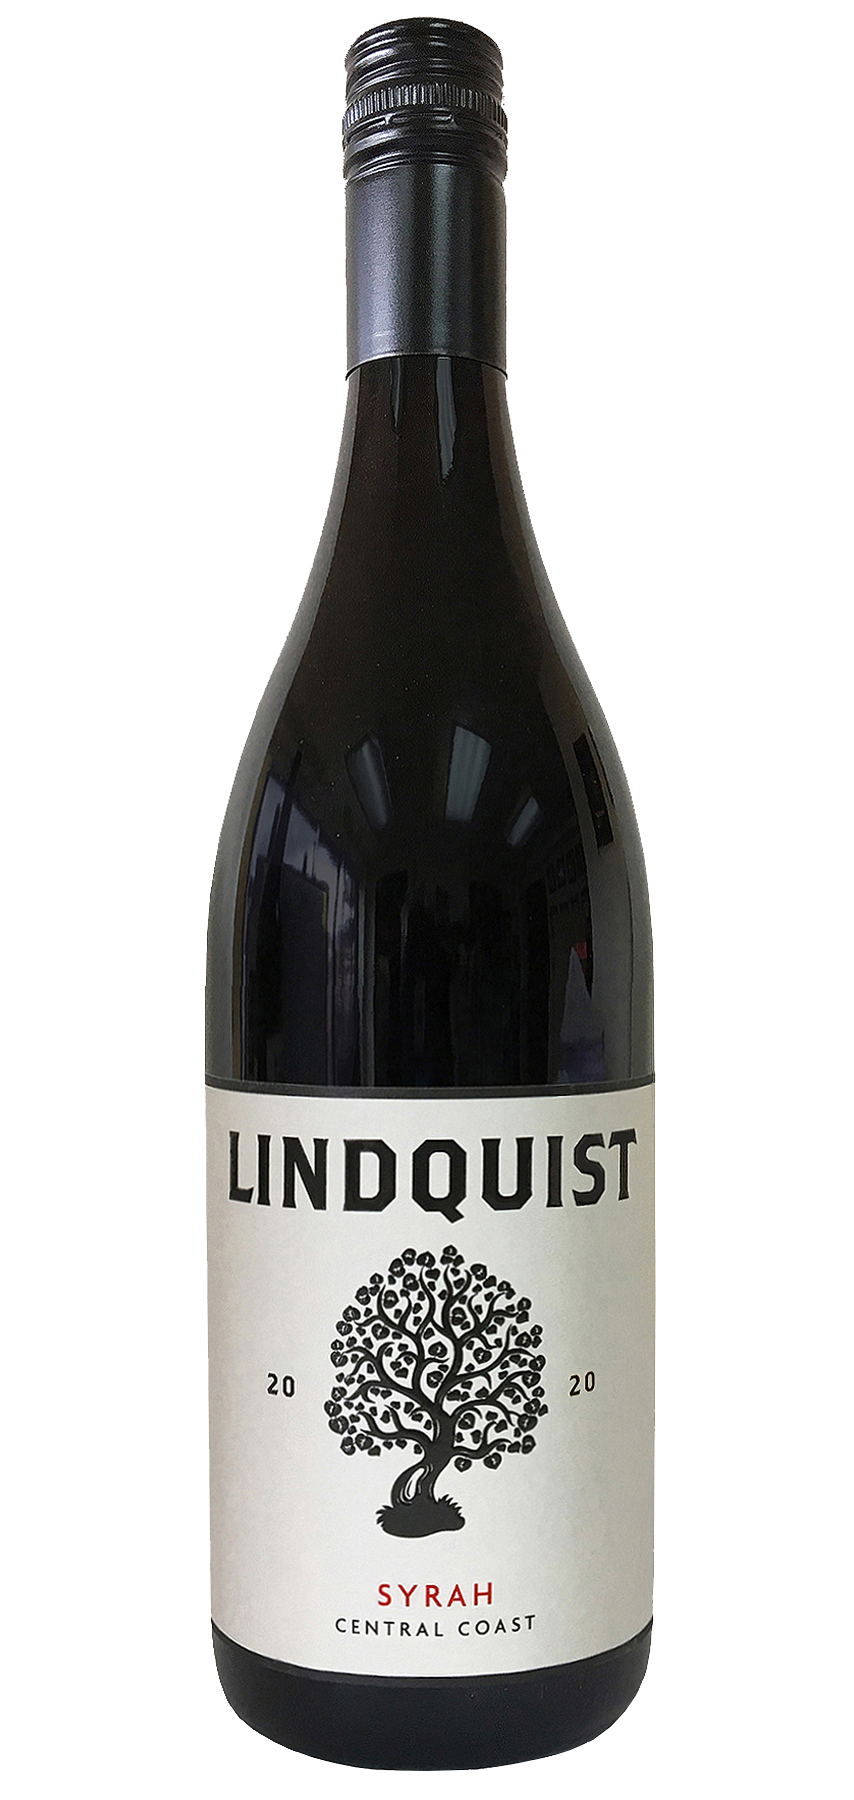 Lindquist Family - Central Coast Syrah - Bottle Image